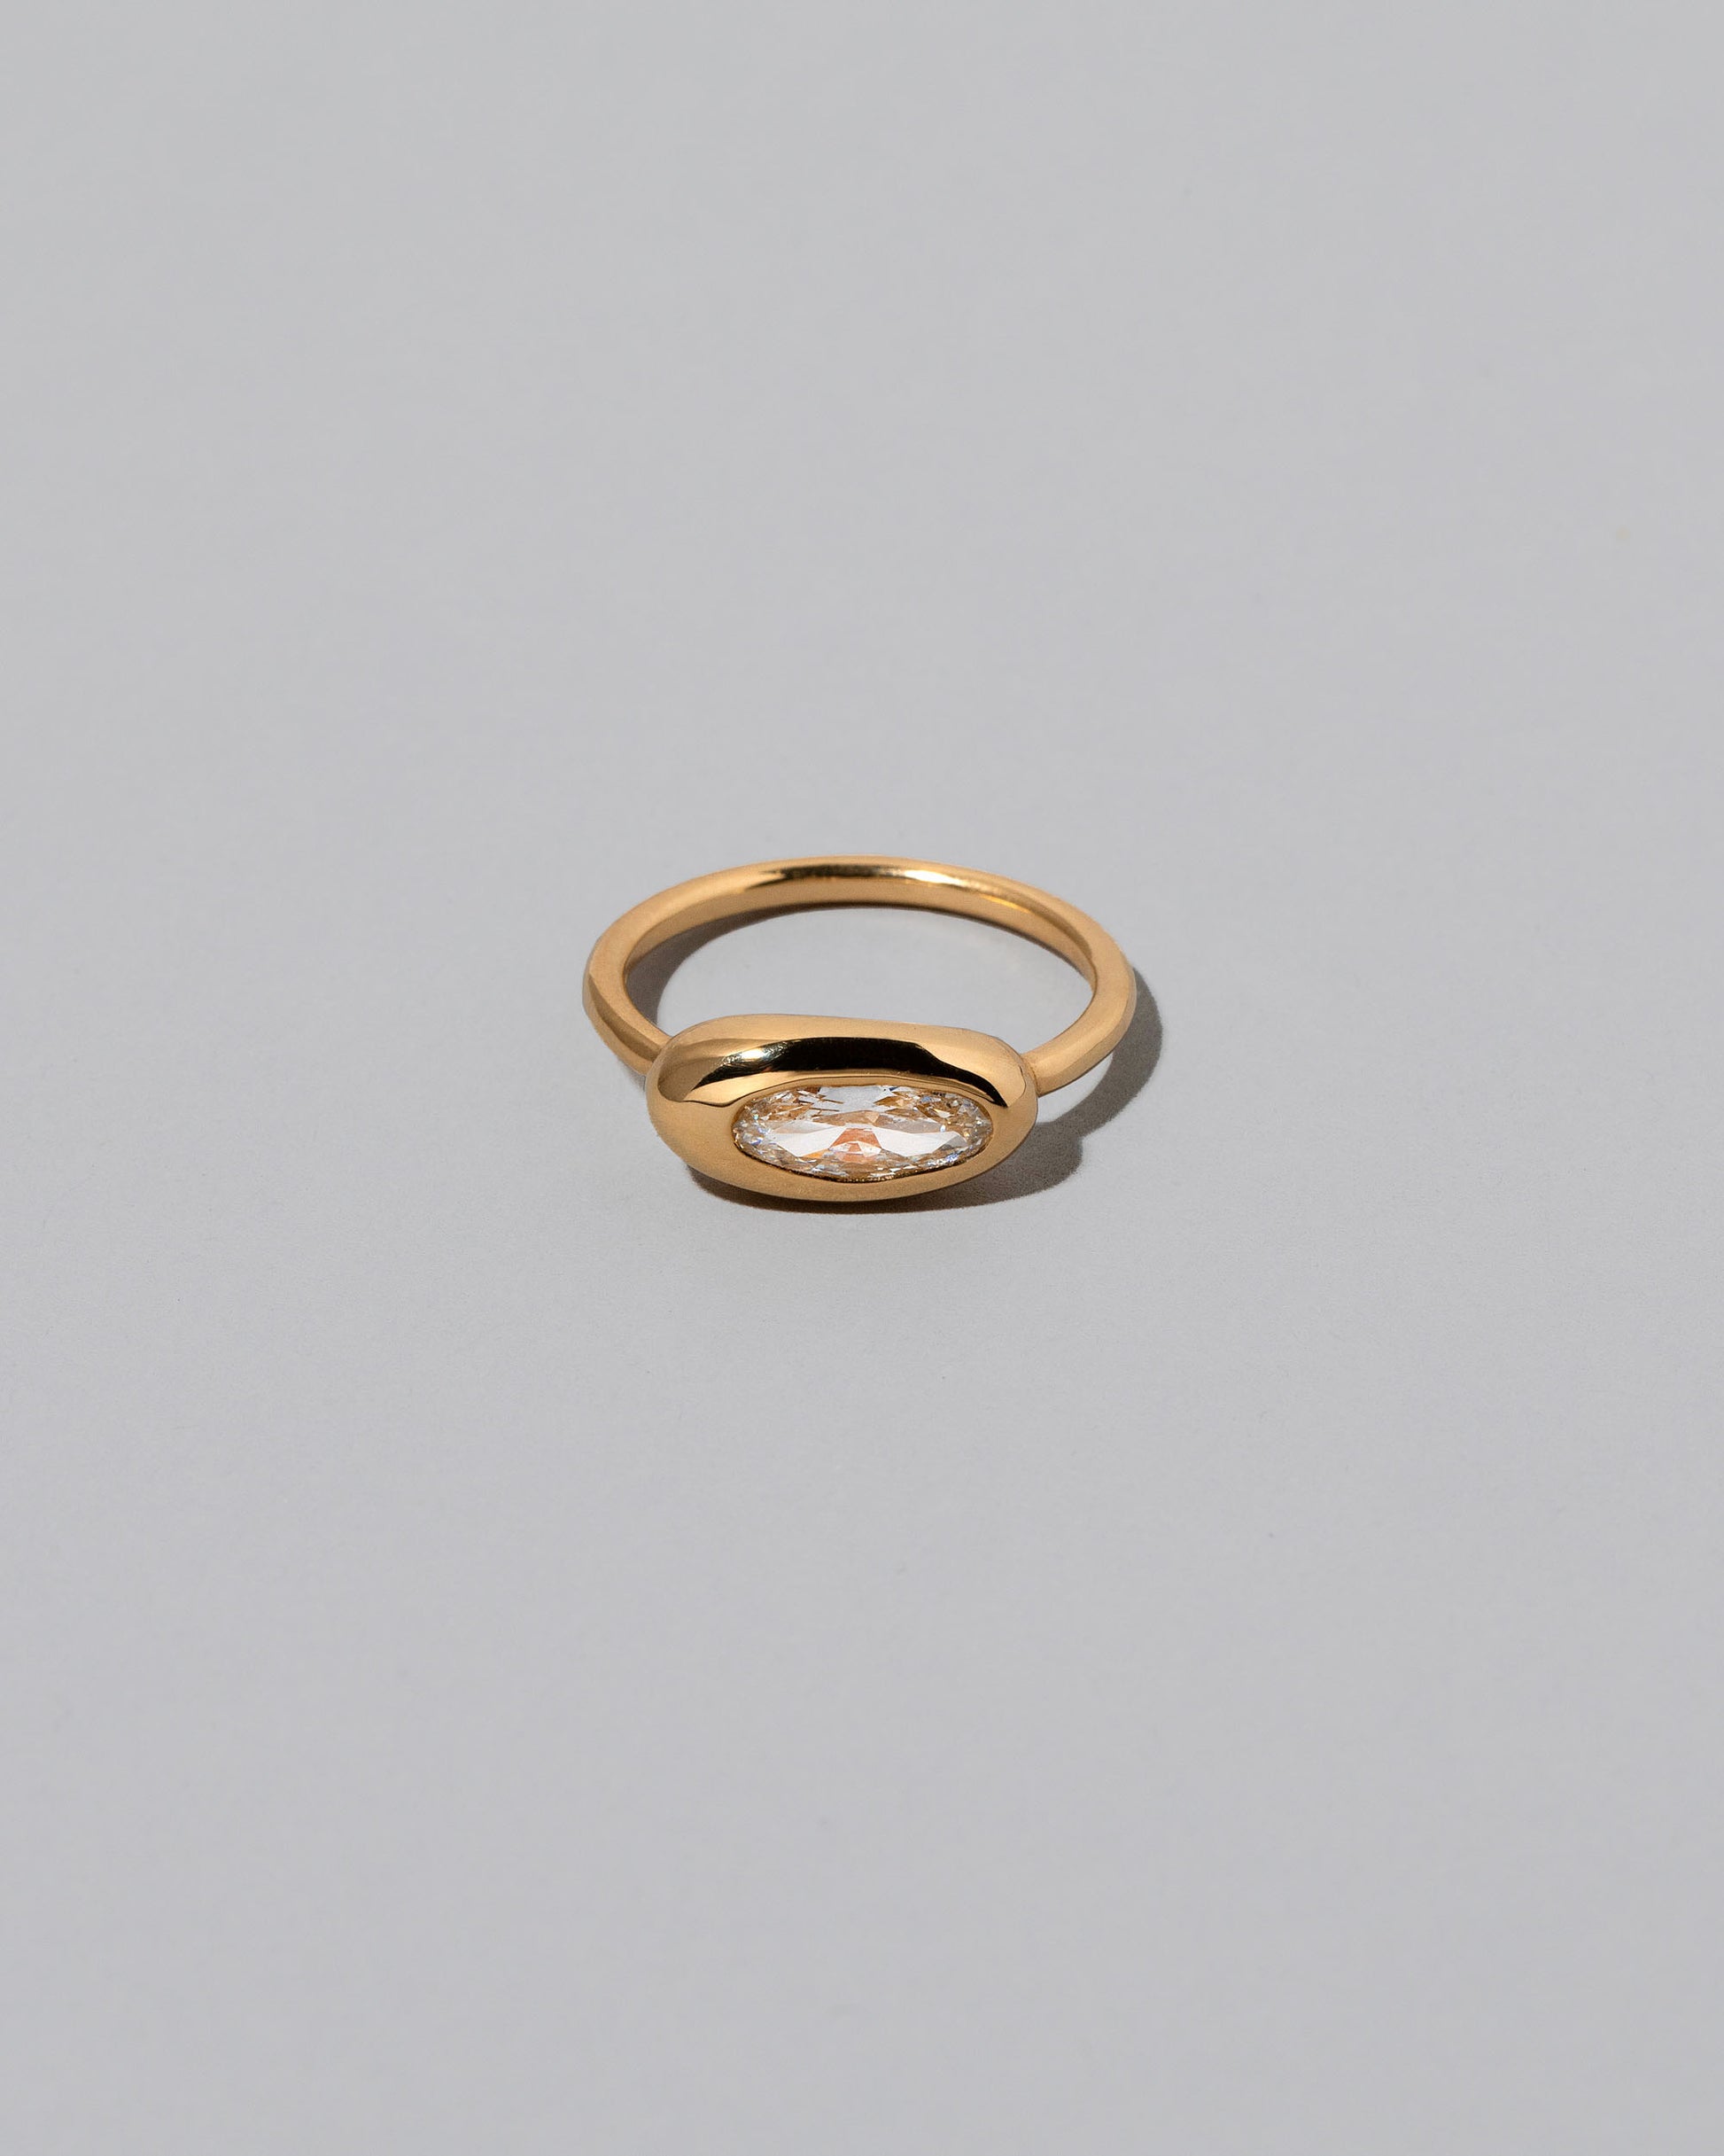 Diamond Equalize Ring on light color background.